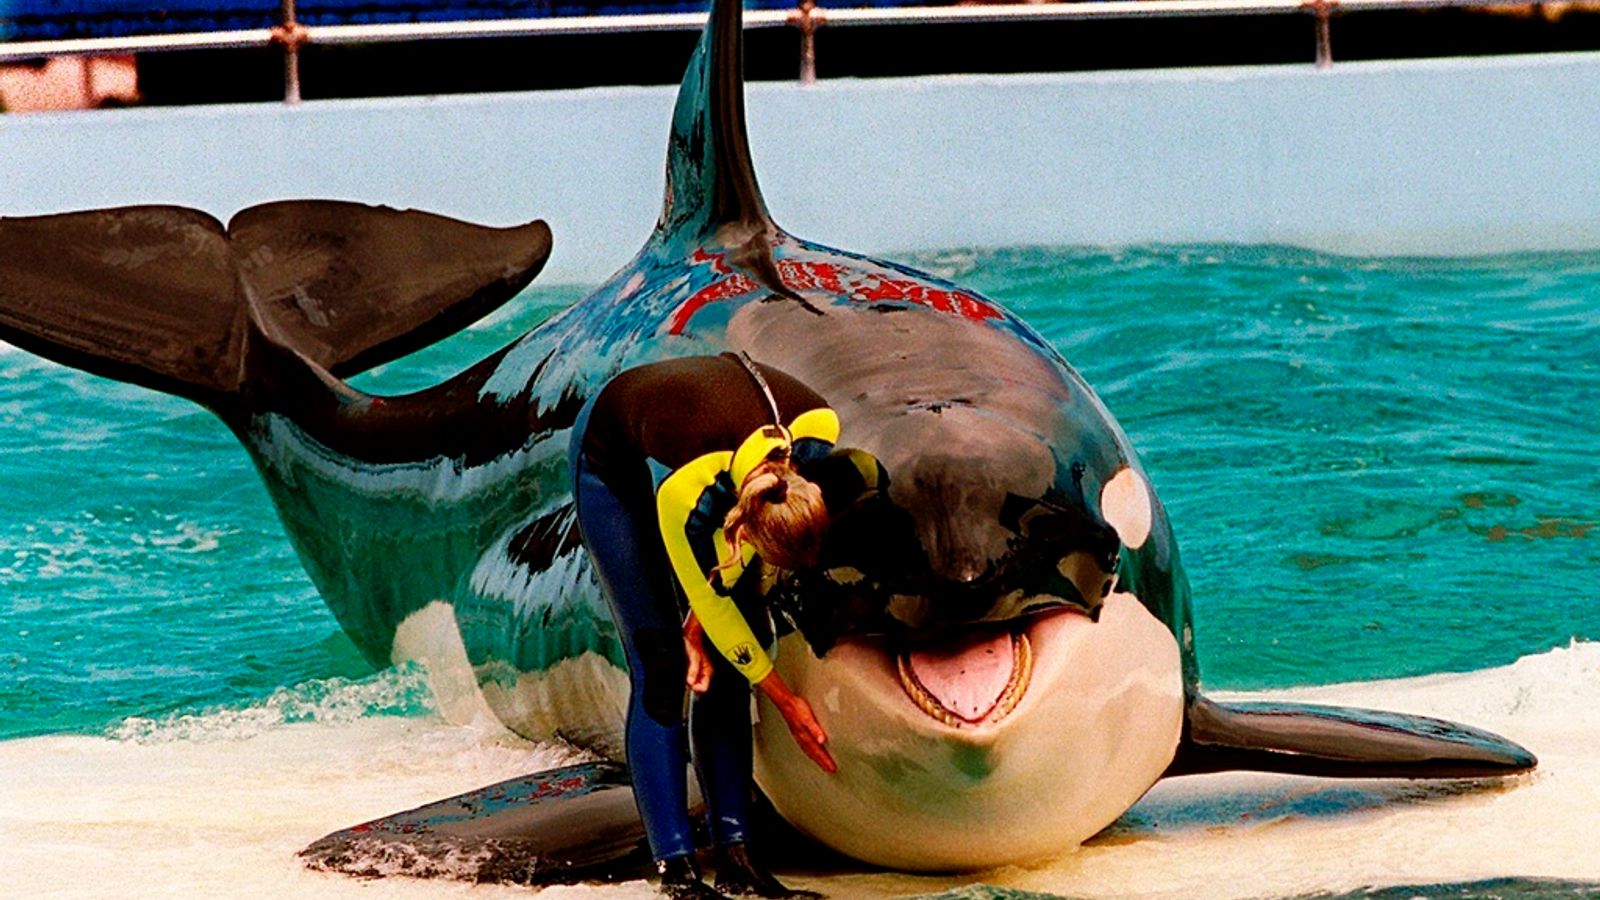 Orca Lolita dies after 52 years in captivity at Miami Seaquarium